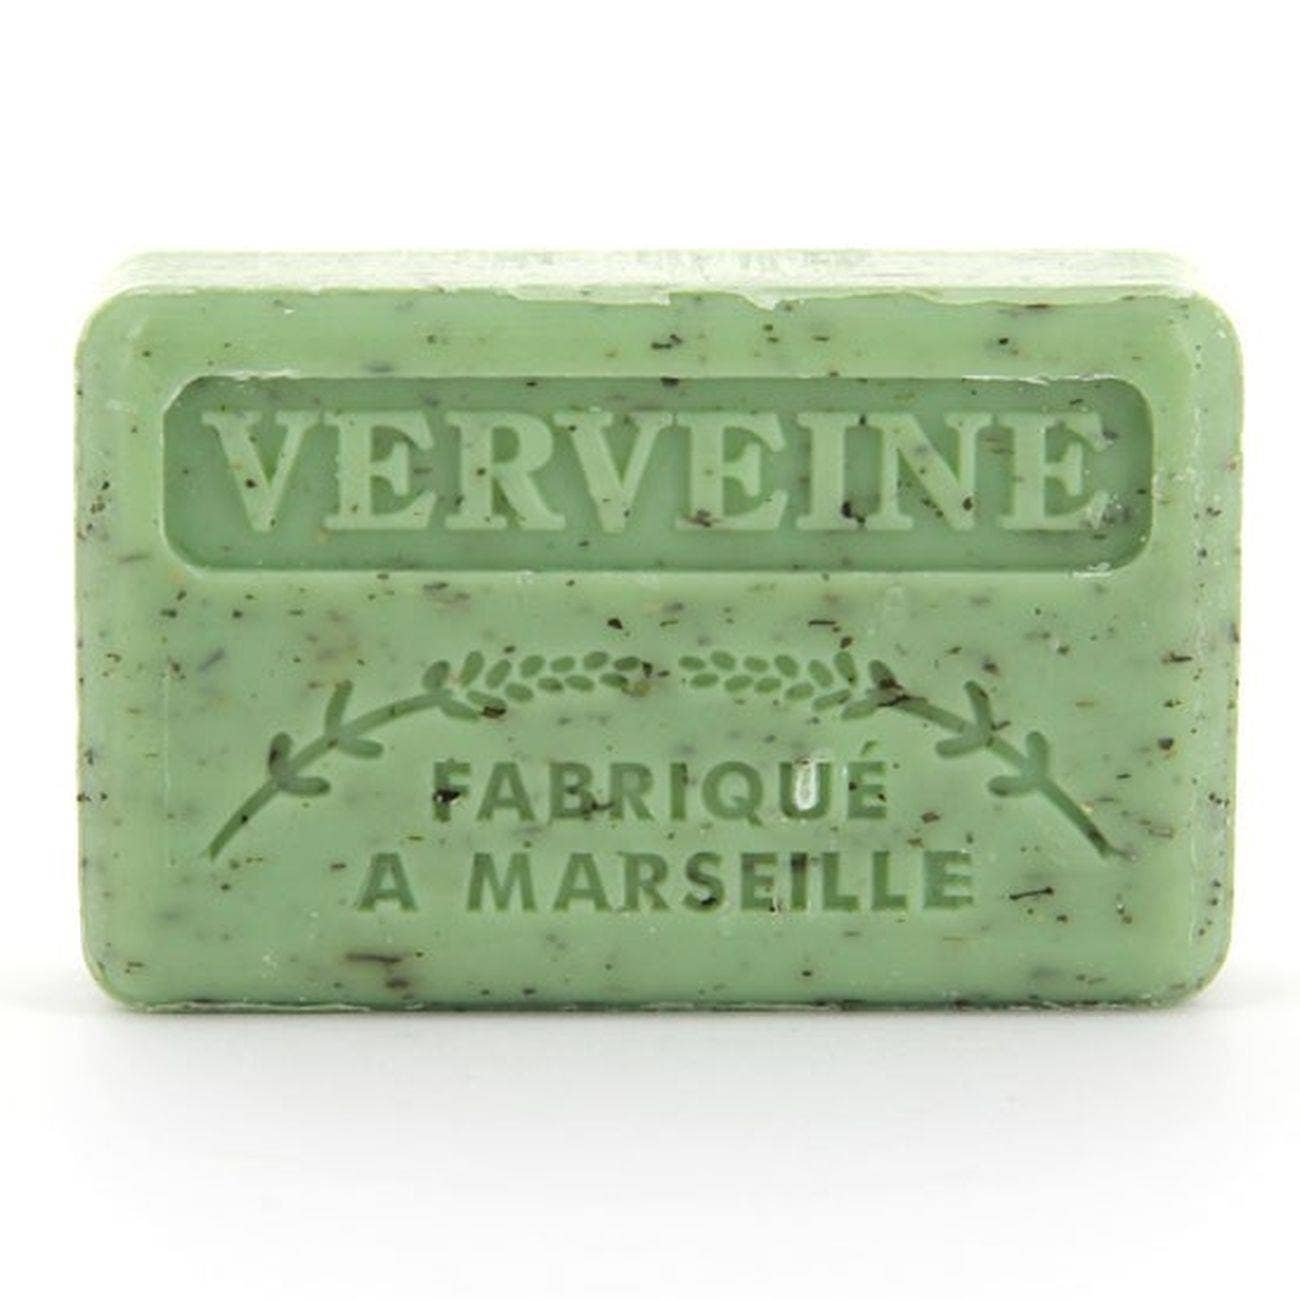 French Soap - Verveine Broye (Crushed Verbena) 125g